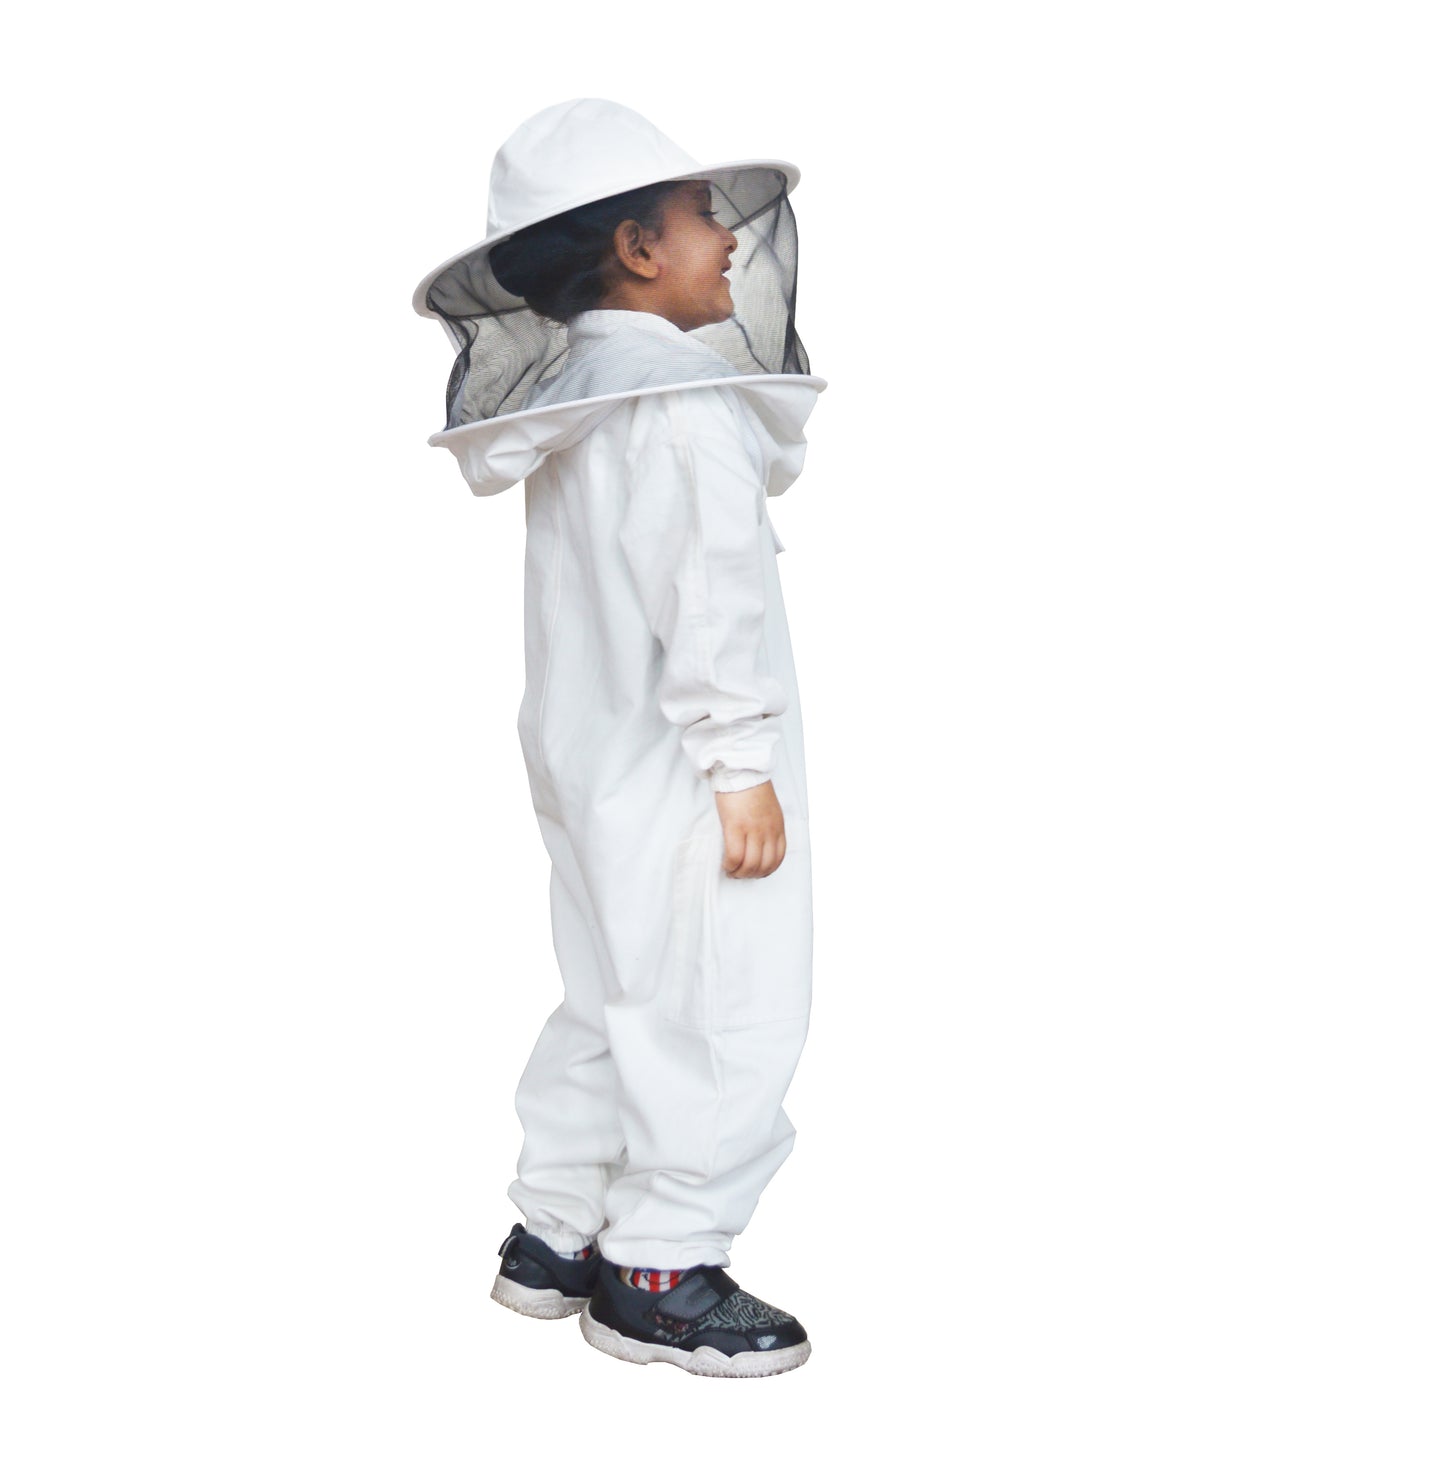 BEEATTIRE Youth Beekeeper Suit Round Hood Cotton Kids Beekeeping Suit Children Beekeeping Suit